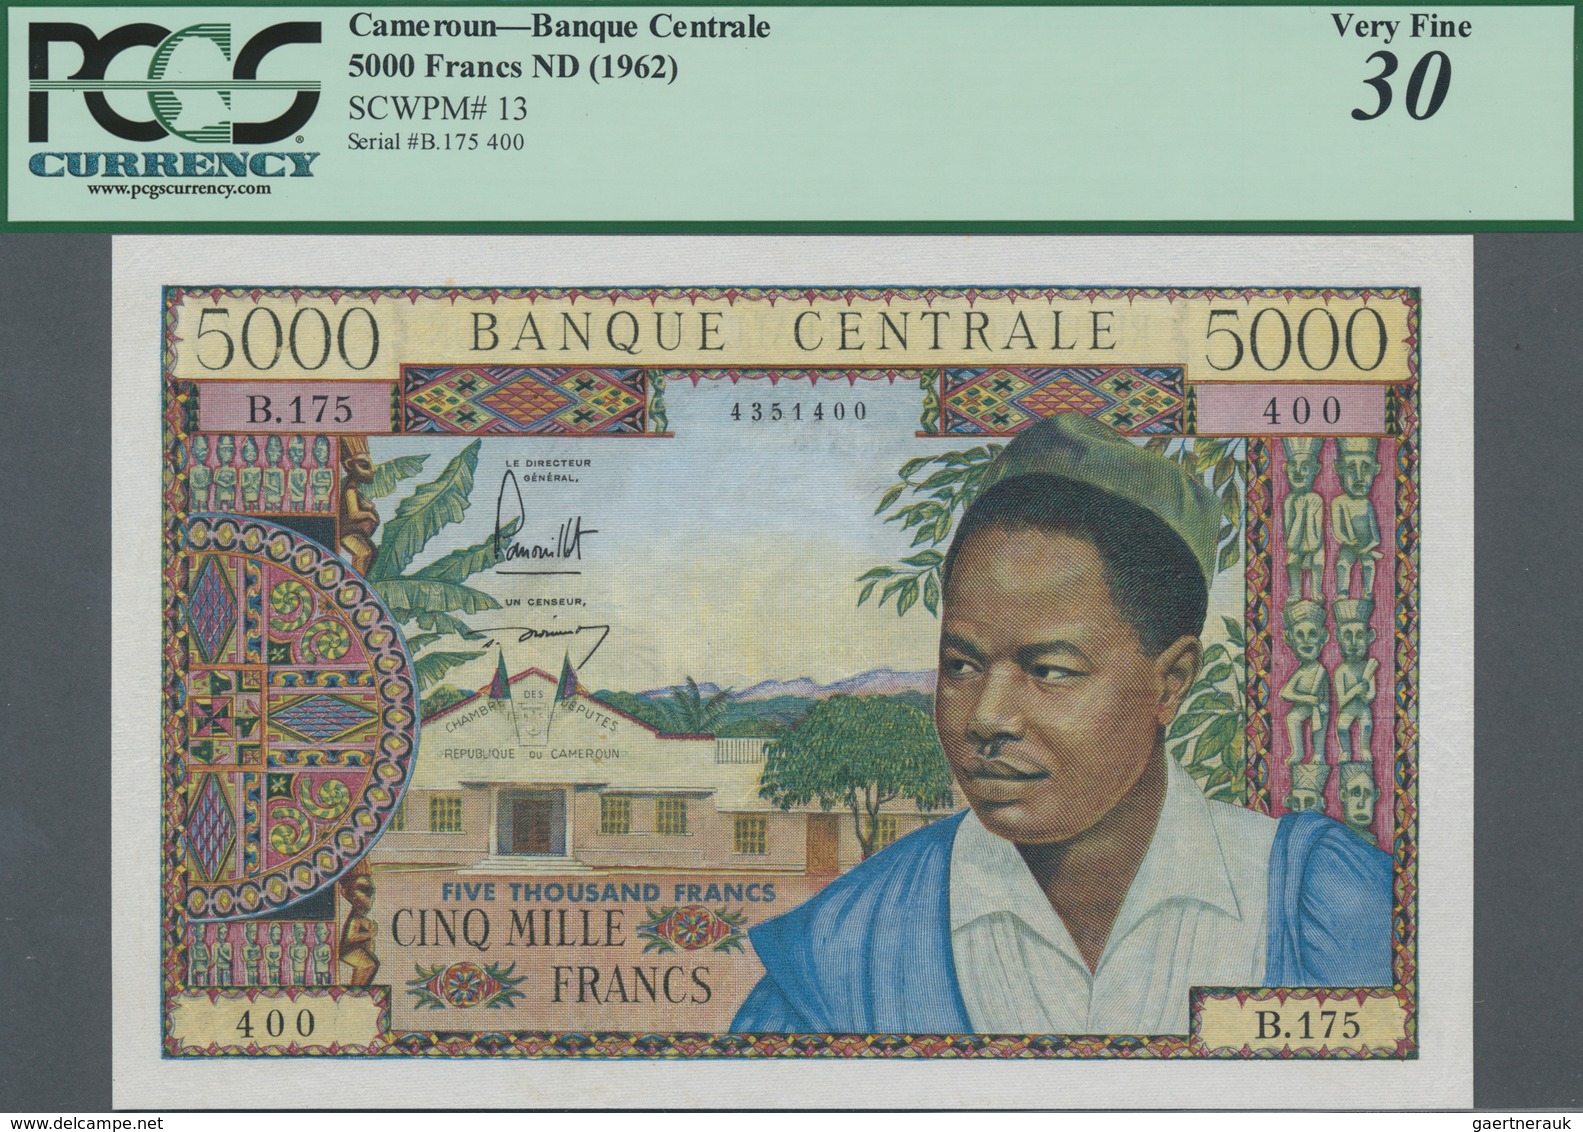 Cameroon / Kamerun: République Fédérale Du Cameroun 5000 Francs ND(1962), P.13, Very Popular Banknot - Cameroon